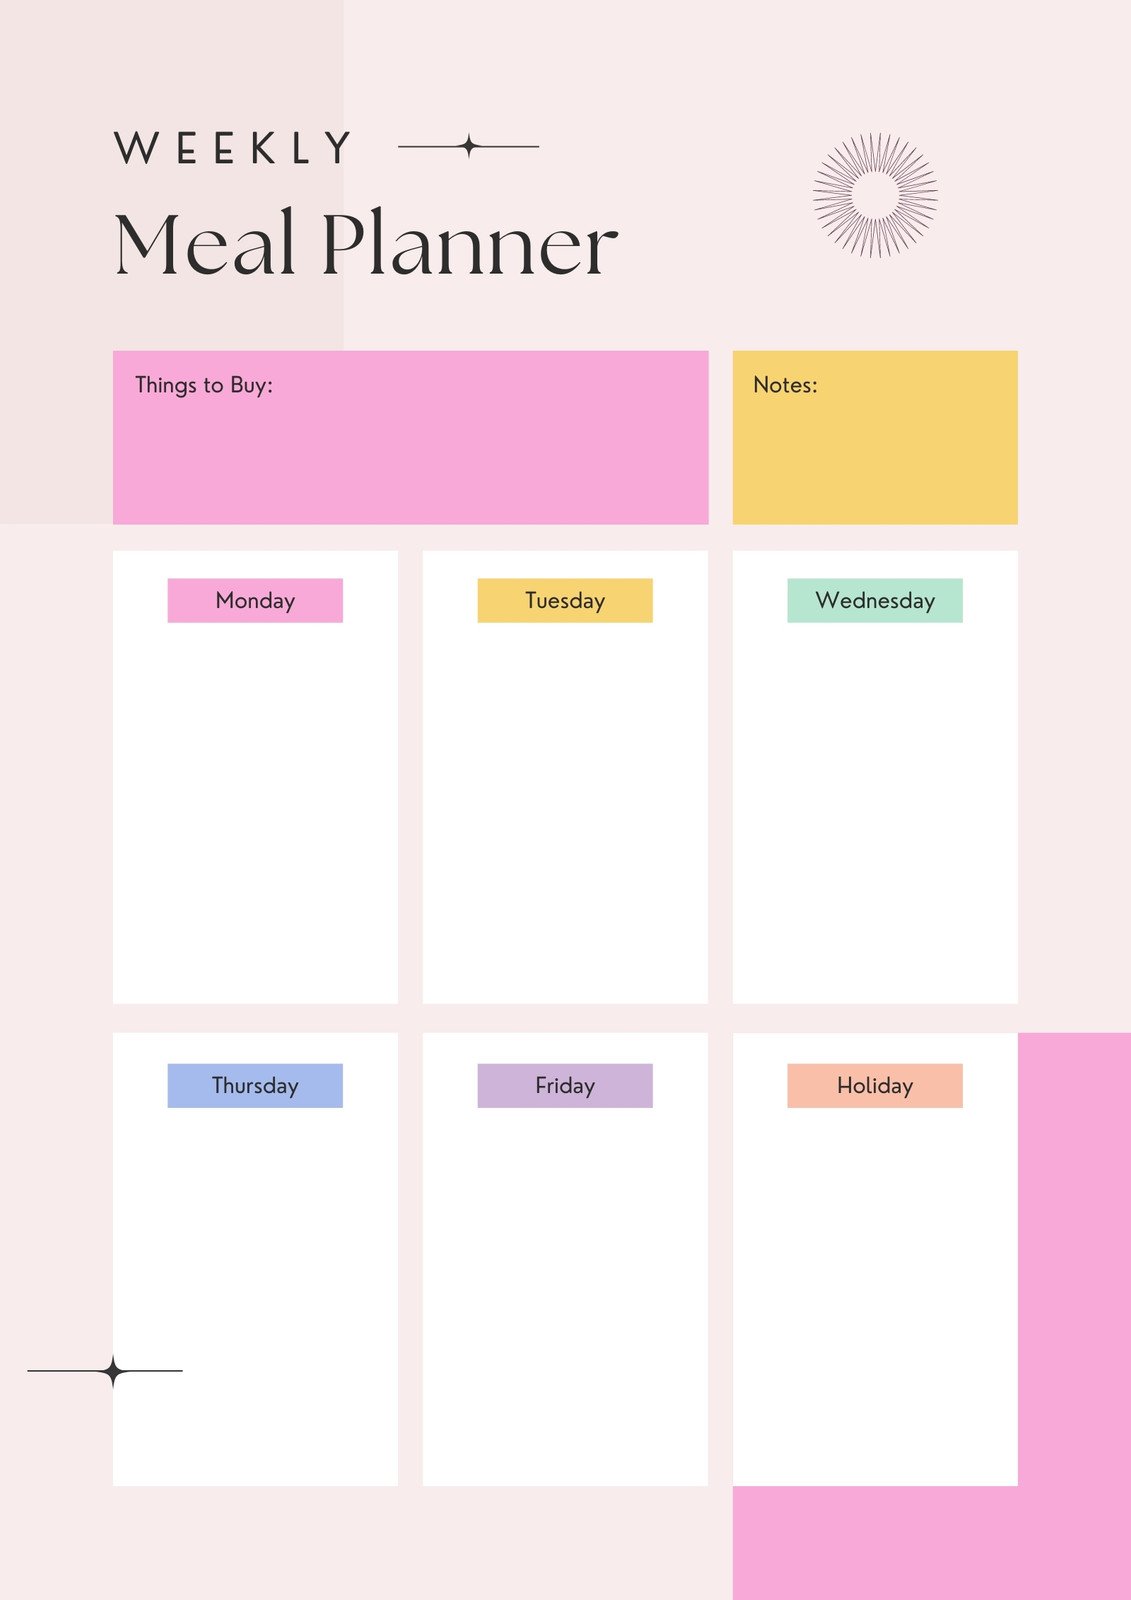 Free, customizable meal planner menu templates